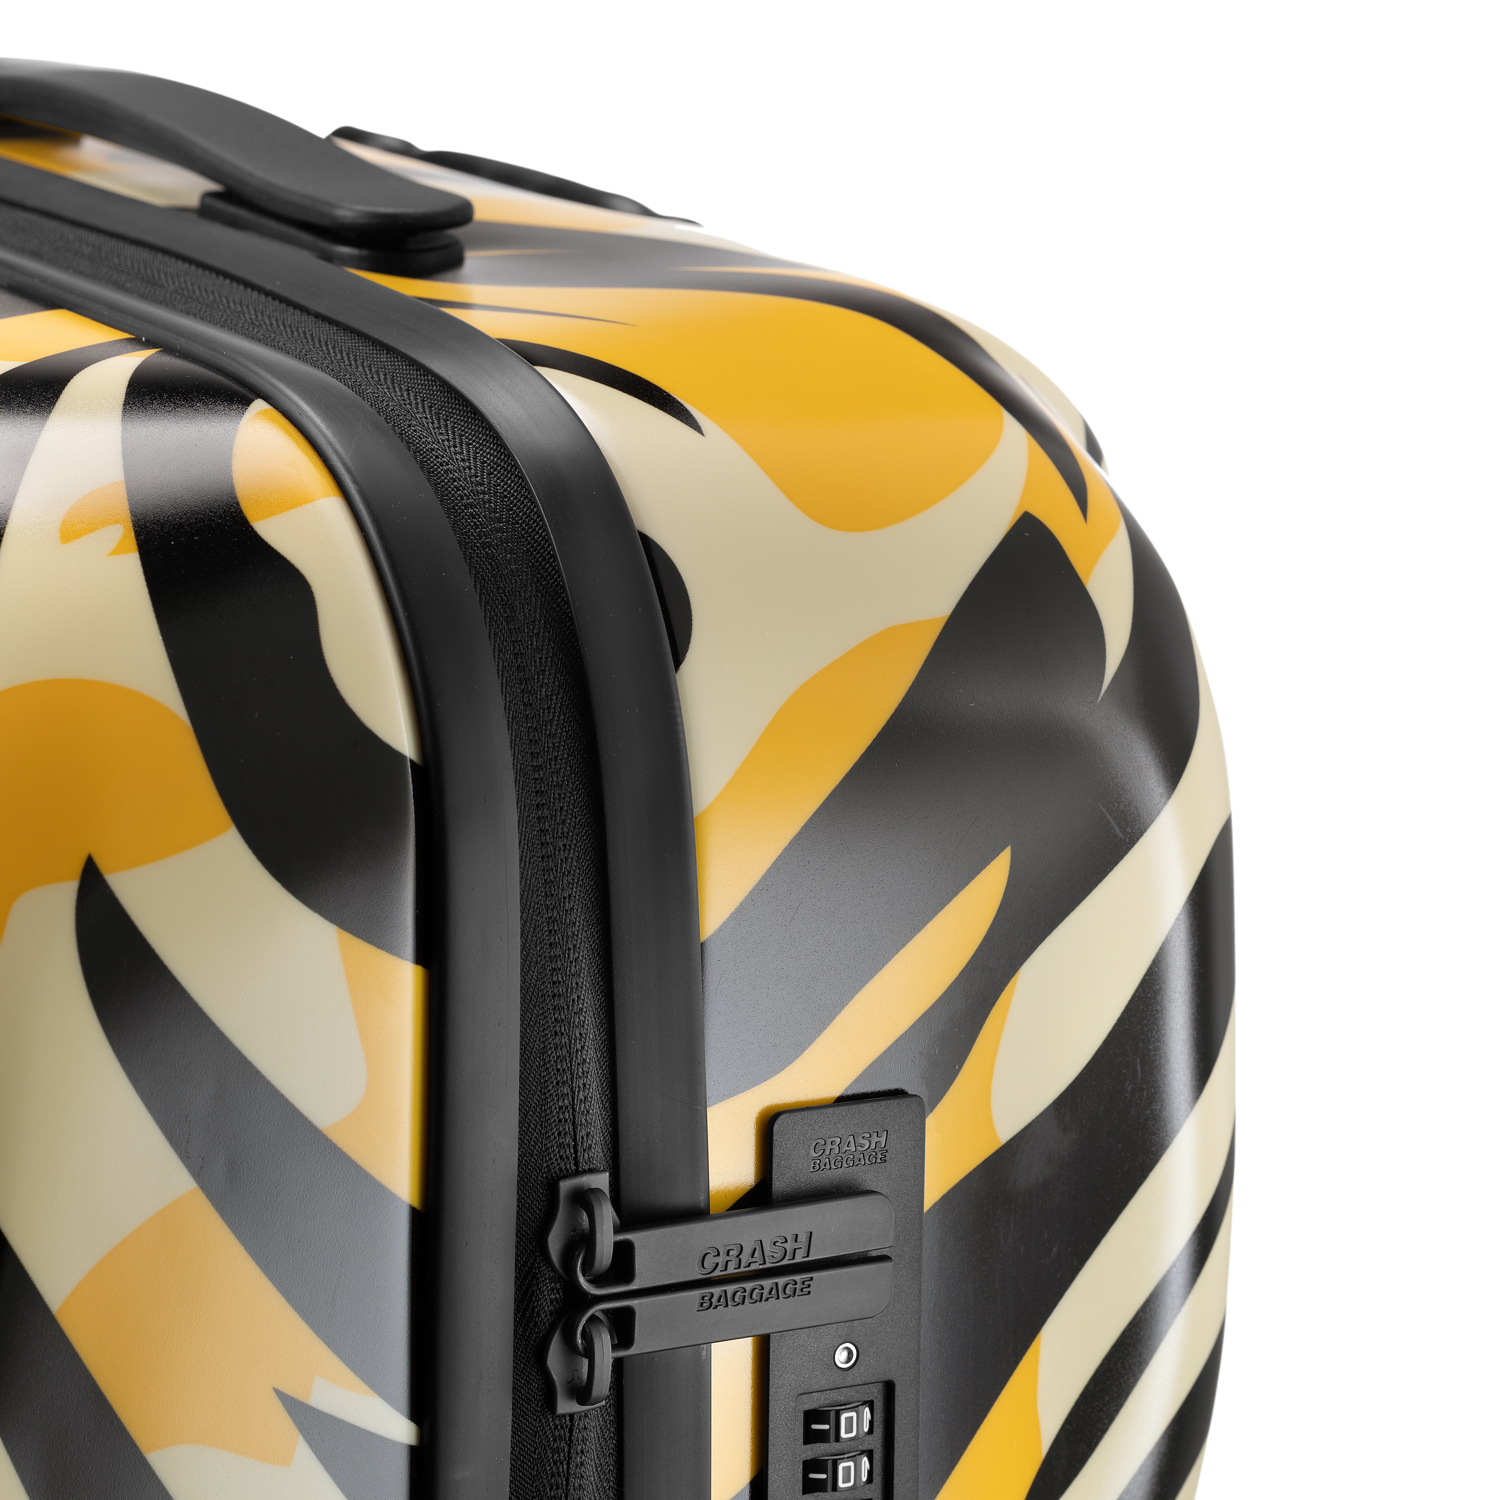 Icon, Camo Medium 4 Wheels Suitcase | Crash Baggage - Wake Concept Store  